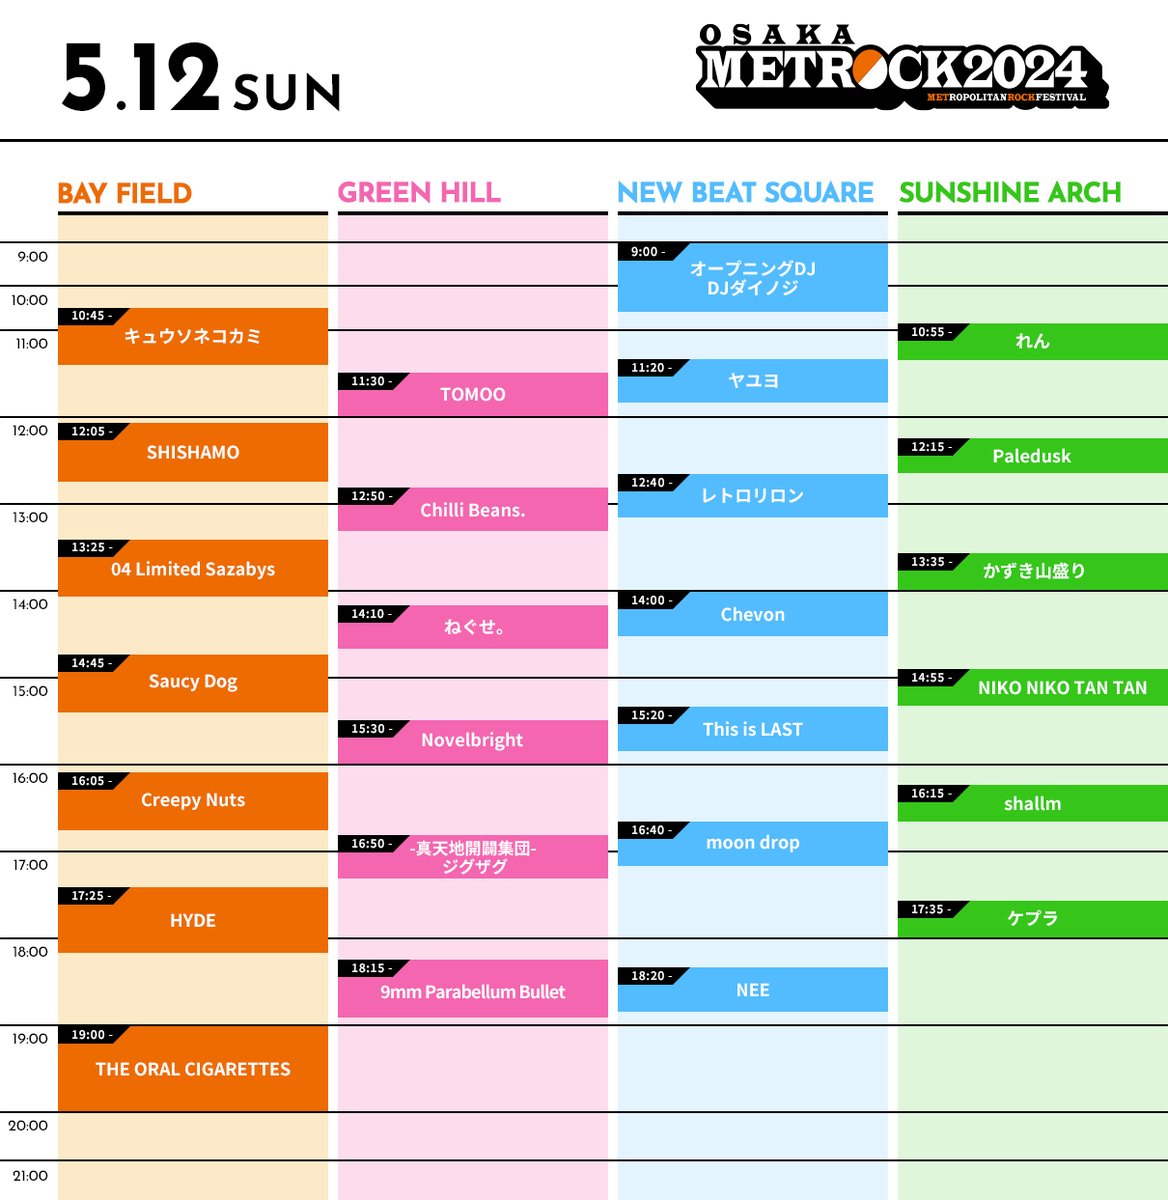 [STAFF] 明日はMETROCK 2024 OSAKA！ HYDEは17:25〜 BAY FIELDに出演します！ 詳しくは↓ metrock.jp/index.html #HYDE #METROCK #メトロック